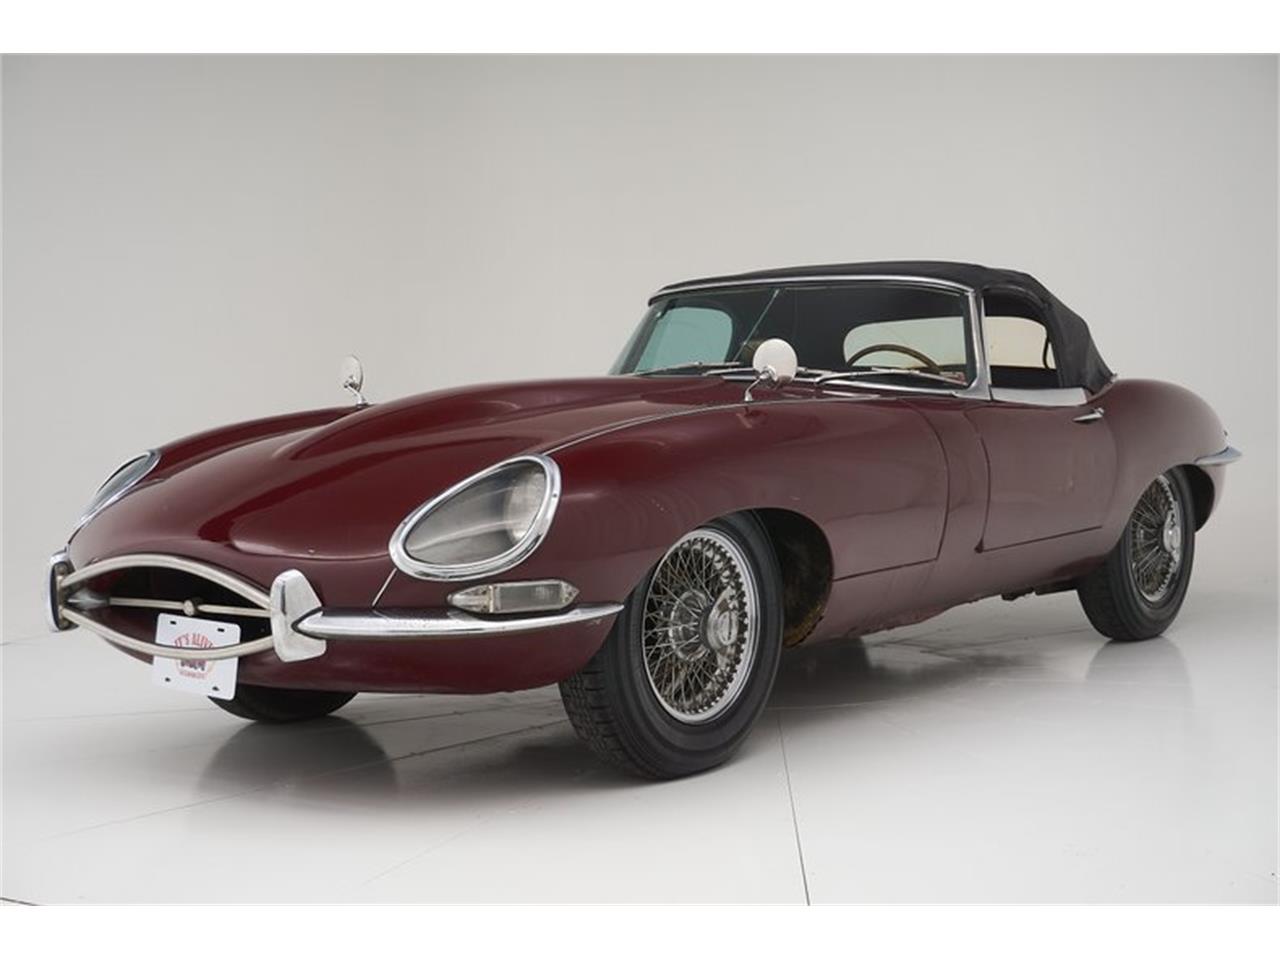 For Sale: 1963 Jaguar E-Type in St Louis, Missouri for sale in Saint Louis, MO